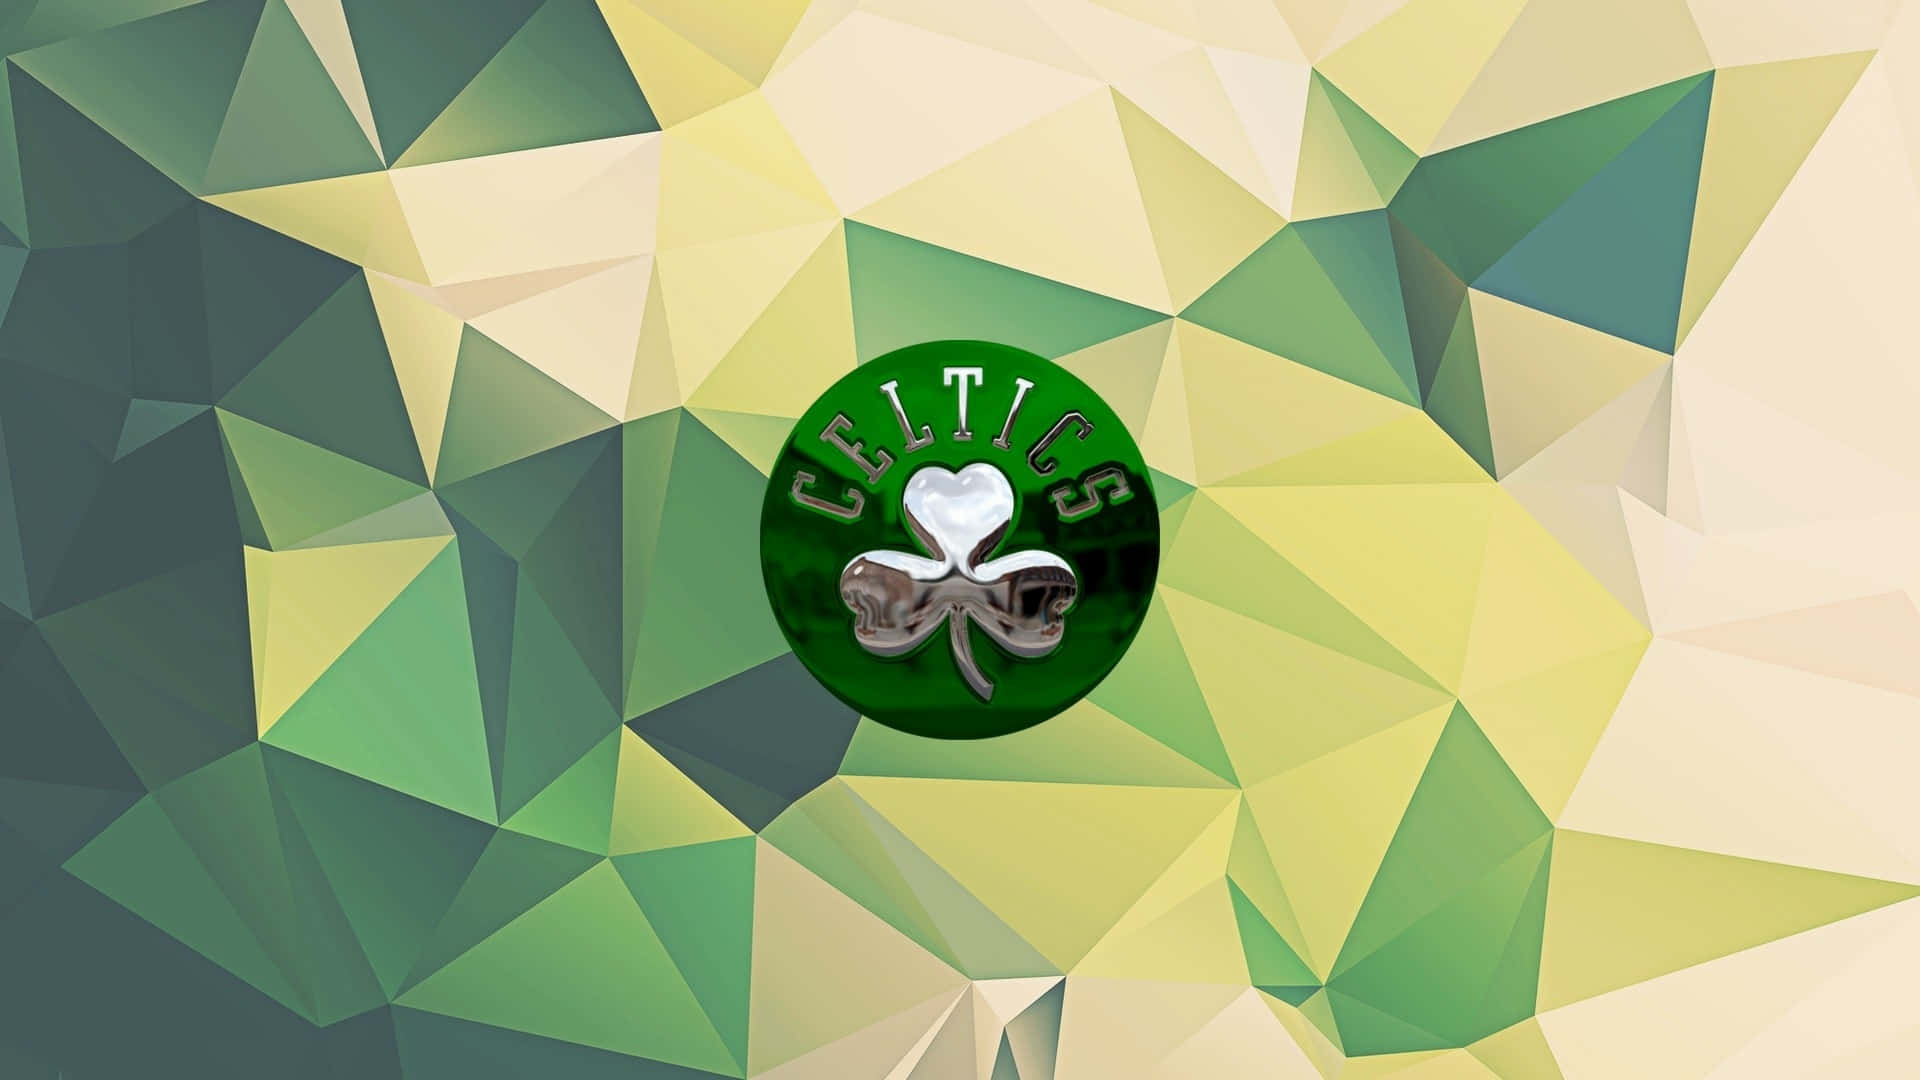 Losboston Celtics: Apasionadamente Desafiando Las Probabilidades